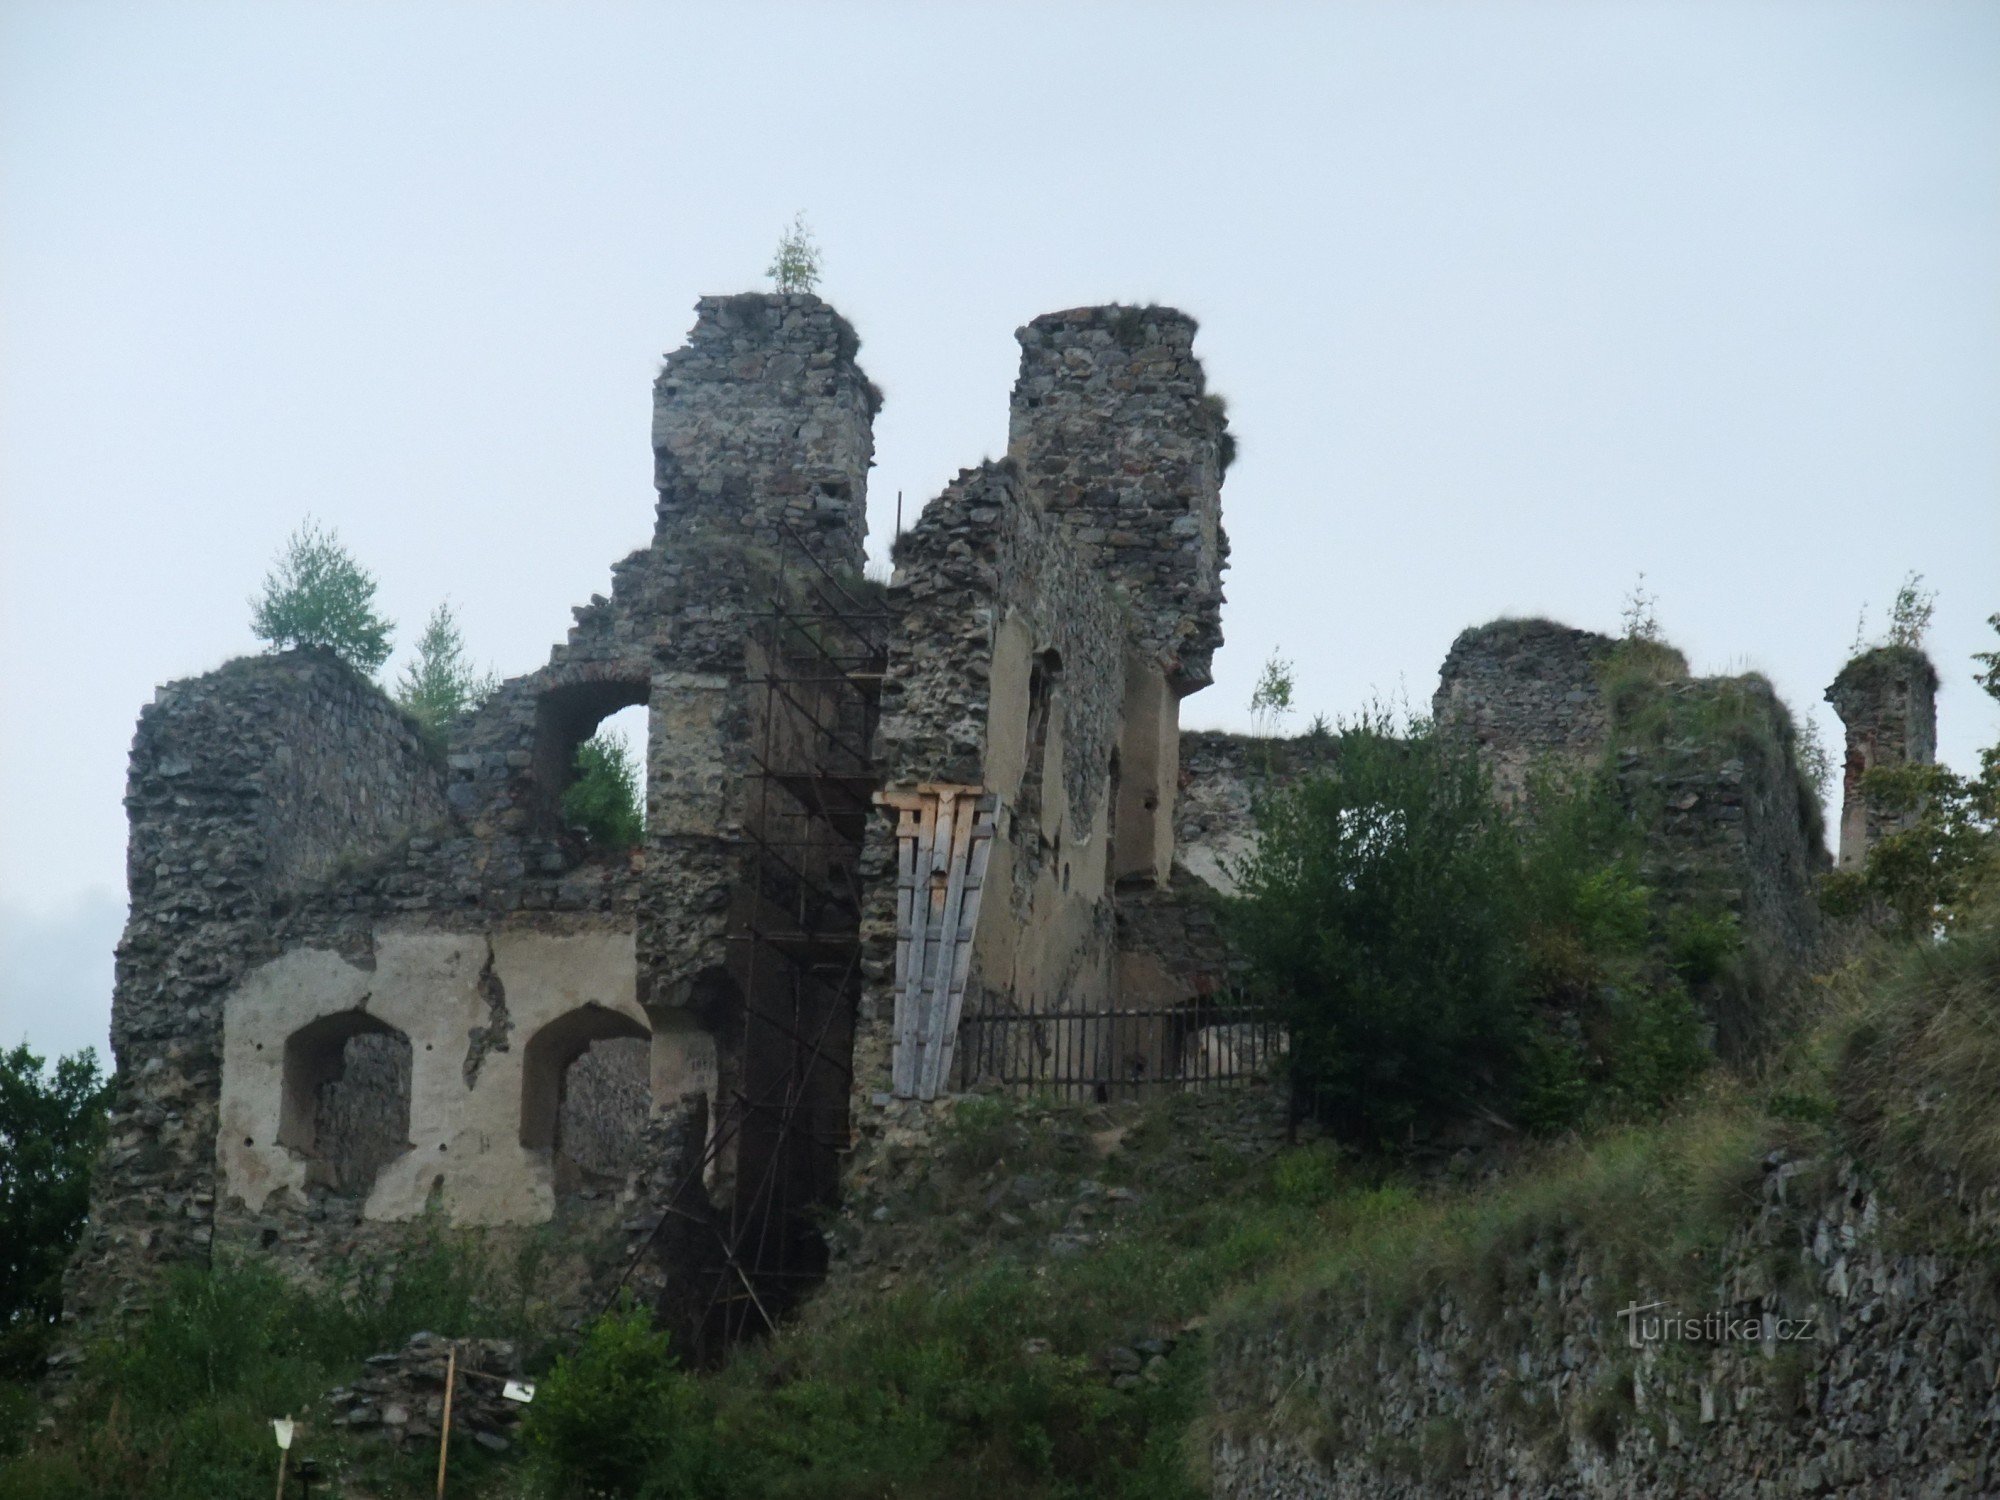 Maiden's Stone Castle